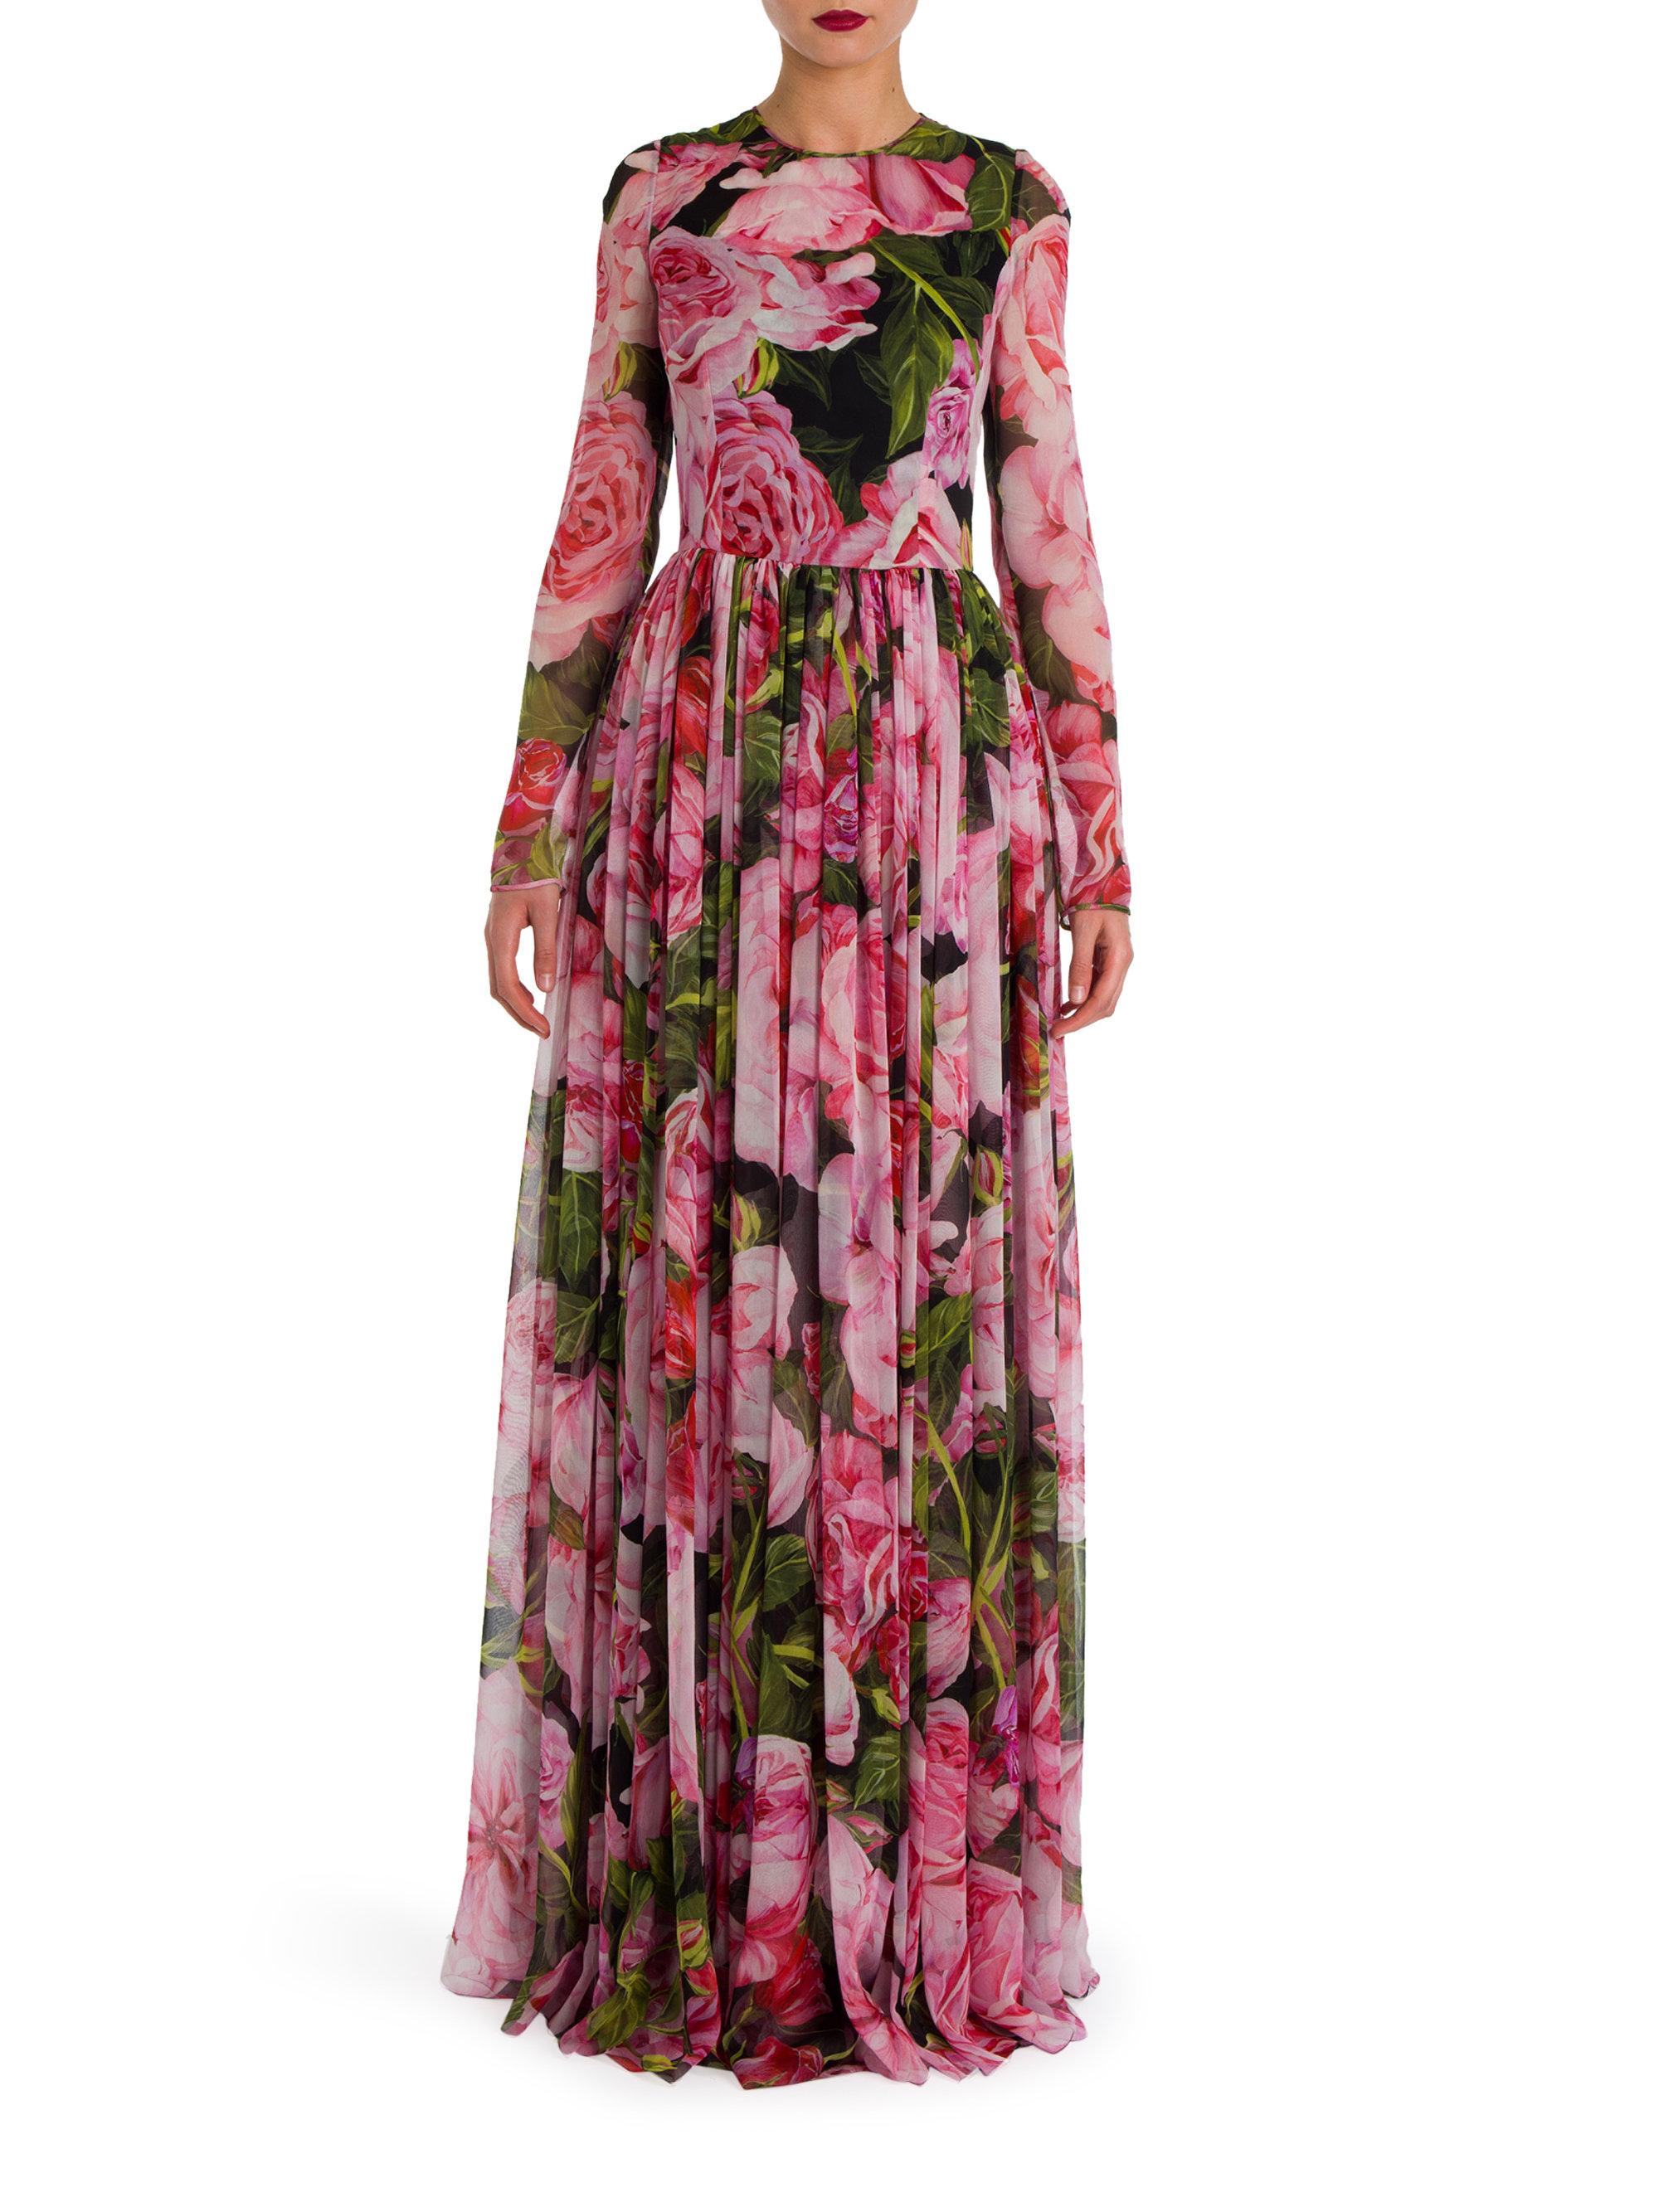 Dolce & gabbana Floral Print Silk Chiffon Gown in Pink | Lyst